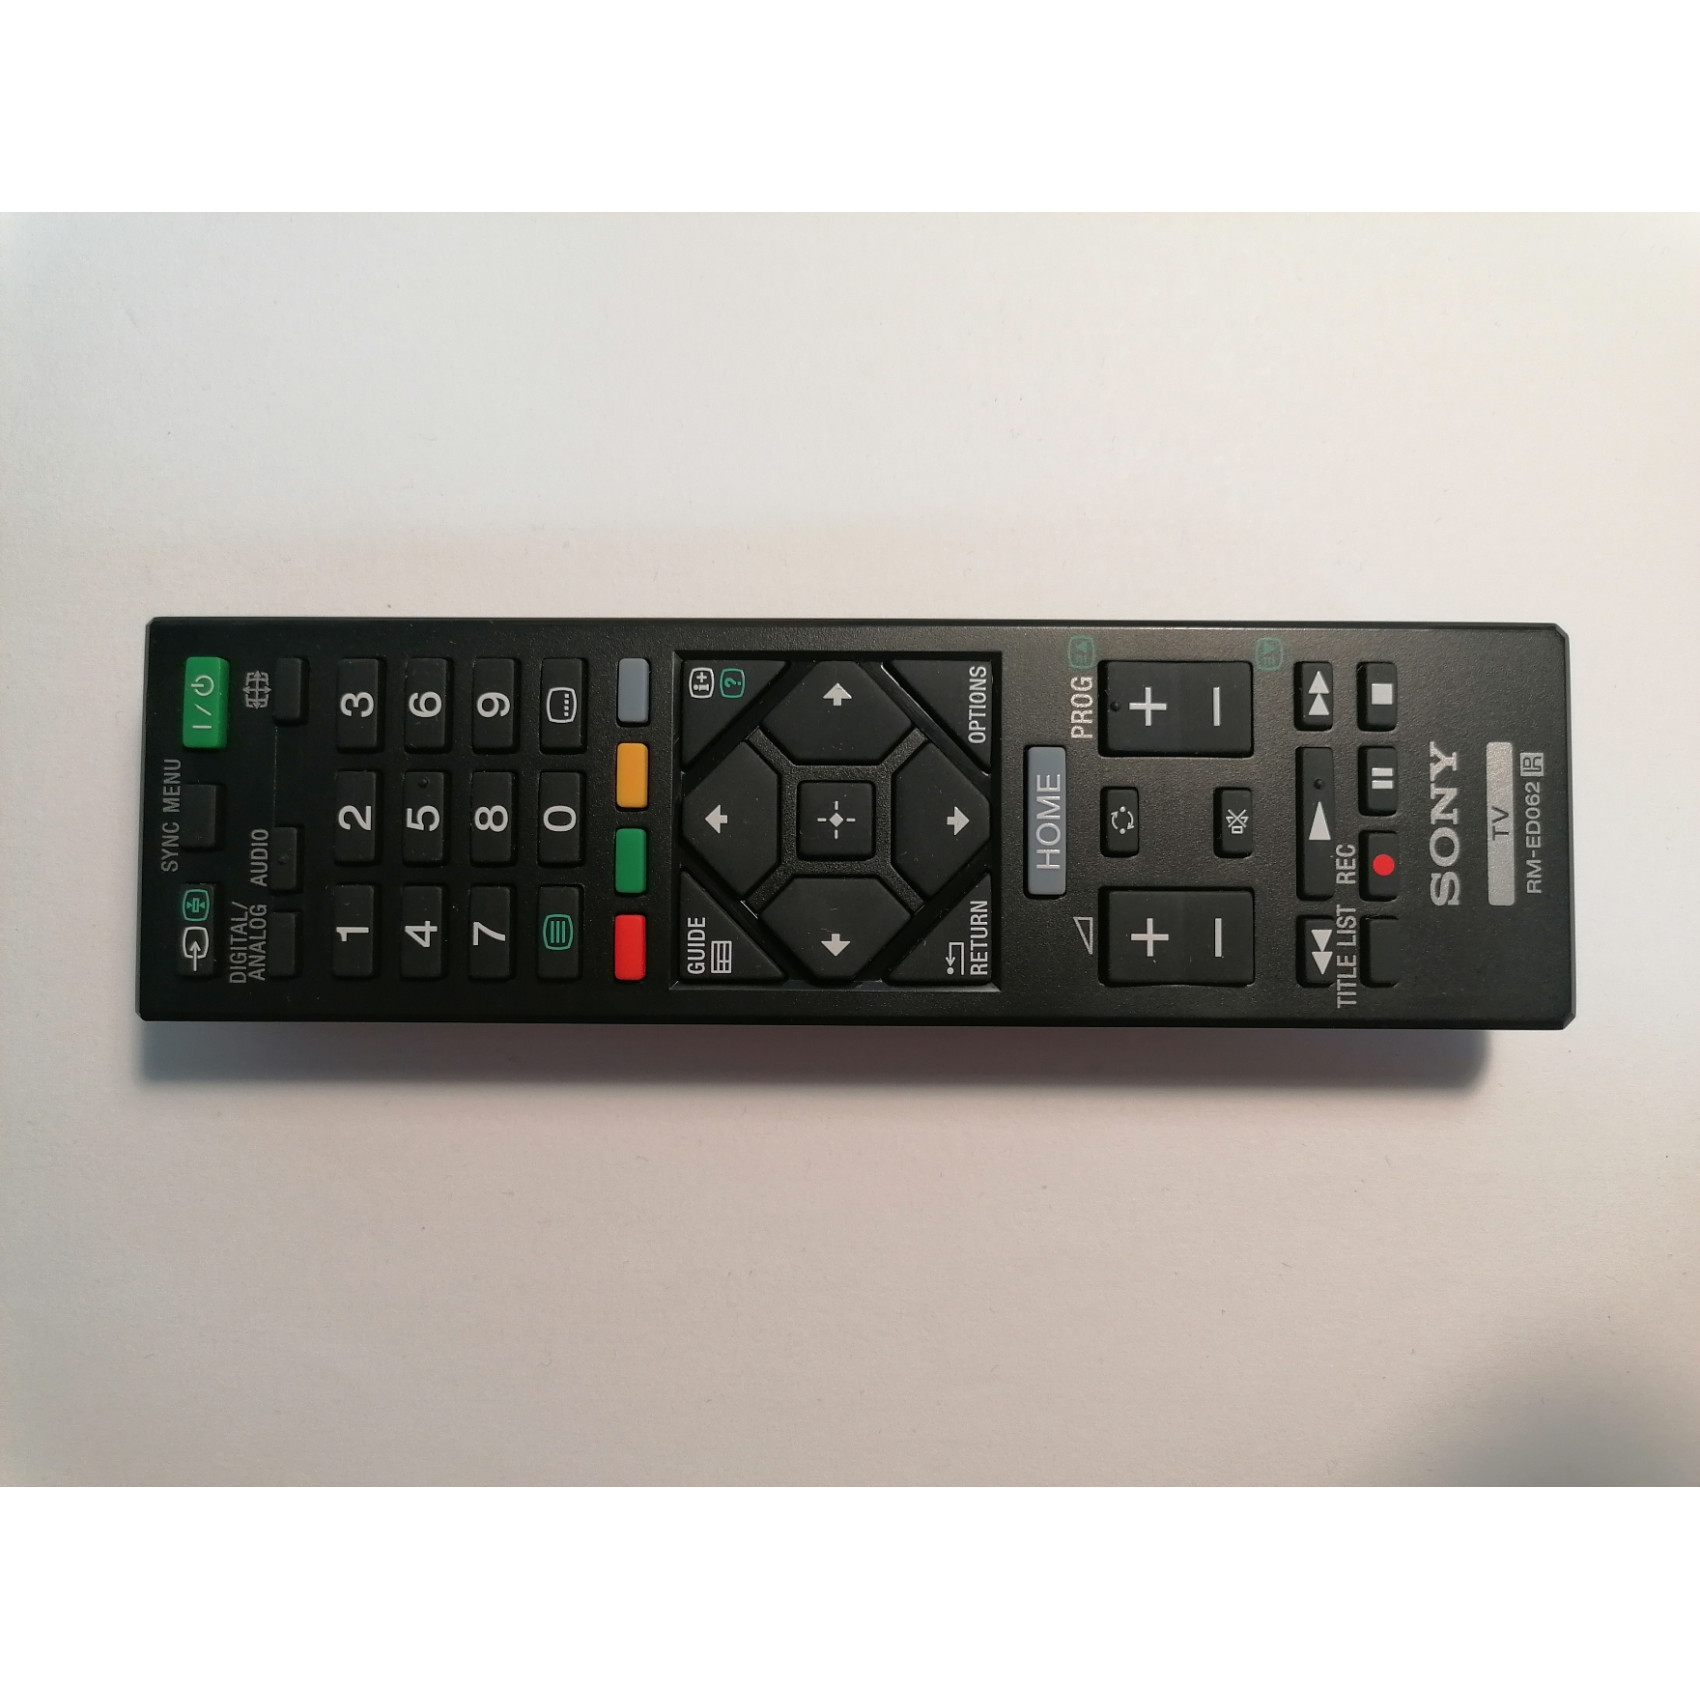 Gargle mate Emptiness Original Sony RM-ED062 P13065-2 remote control Smart TV | Handeltheke